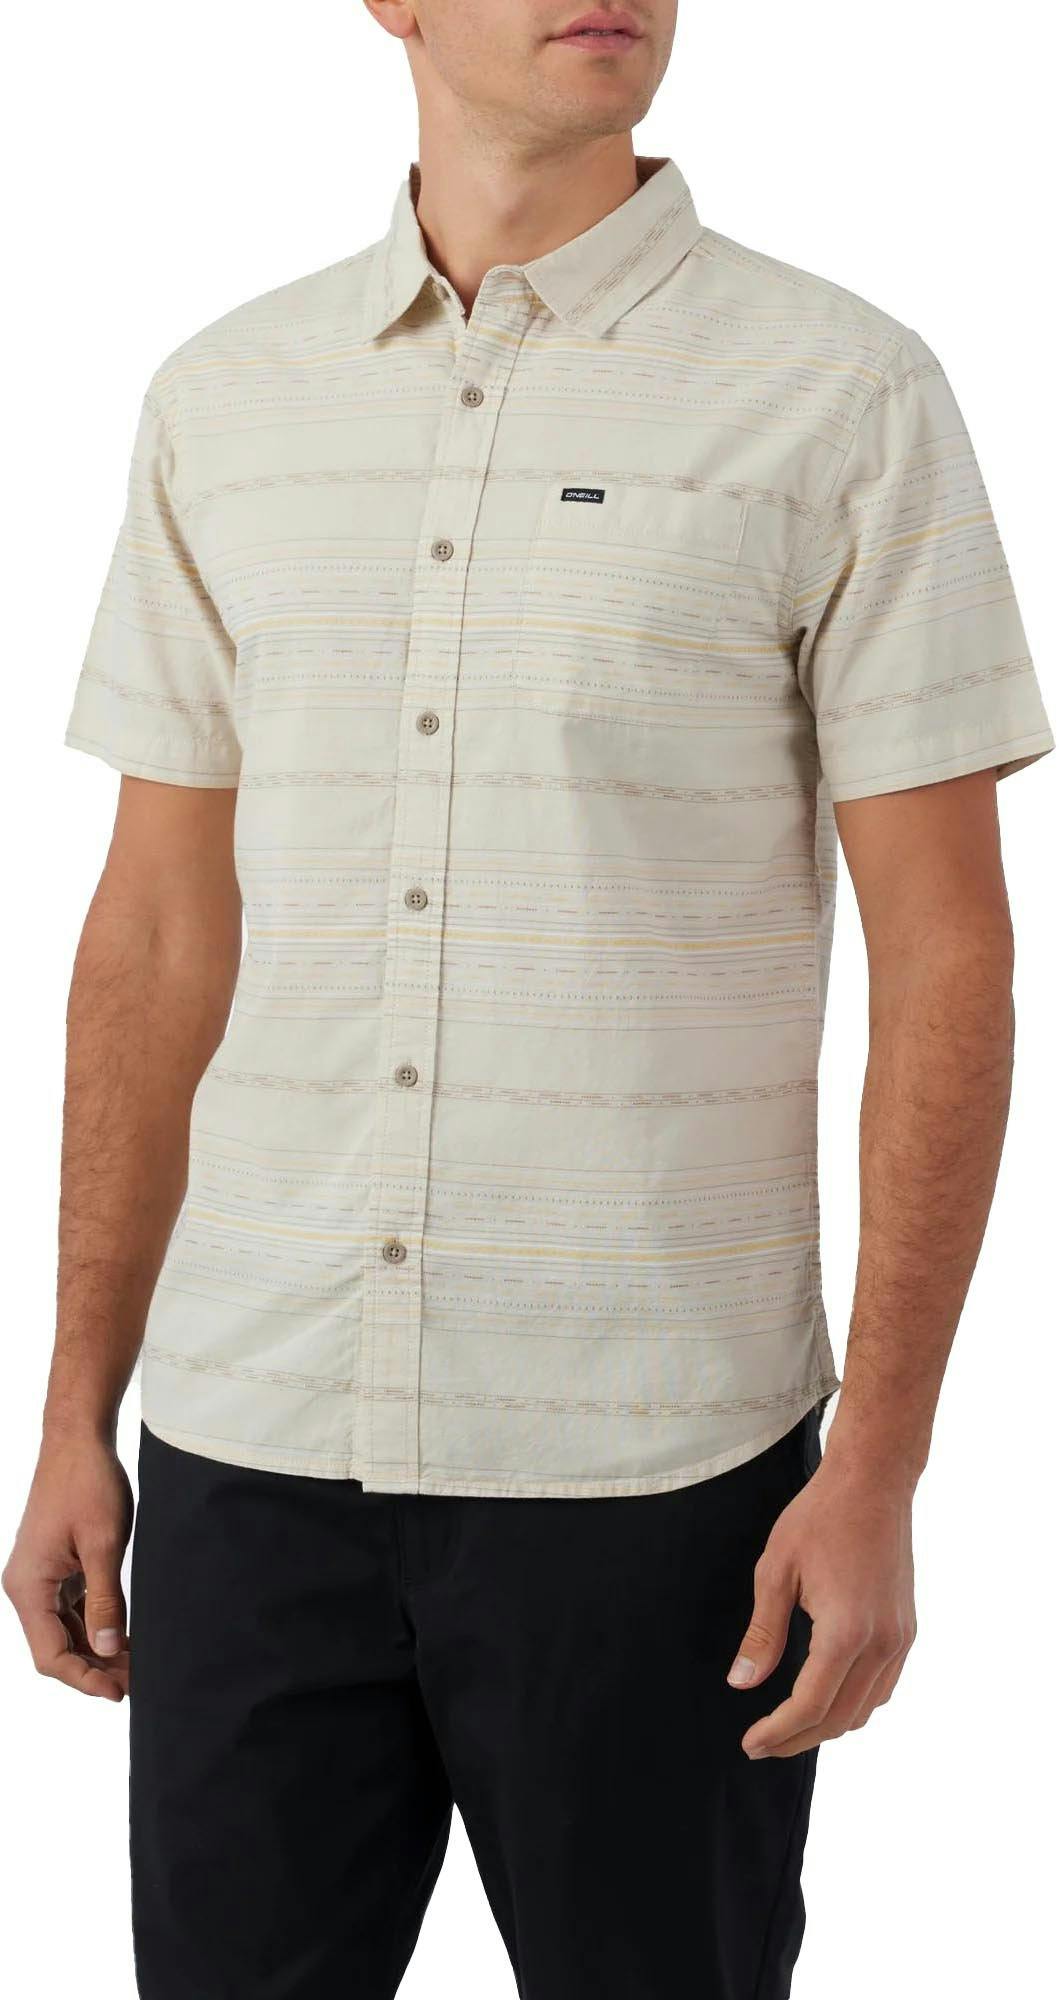 Product image for Seafaring Stripe Short Sleeve Standard Shirt - Men’s